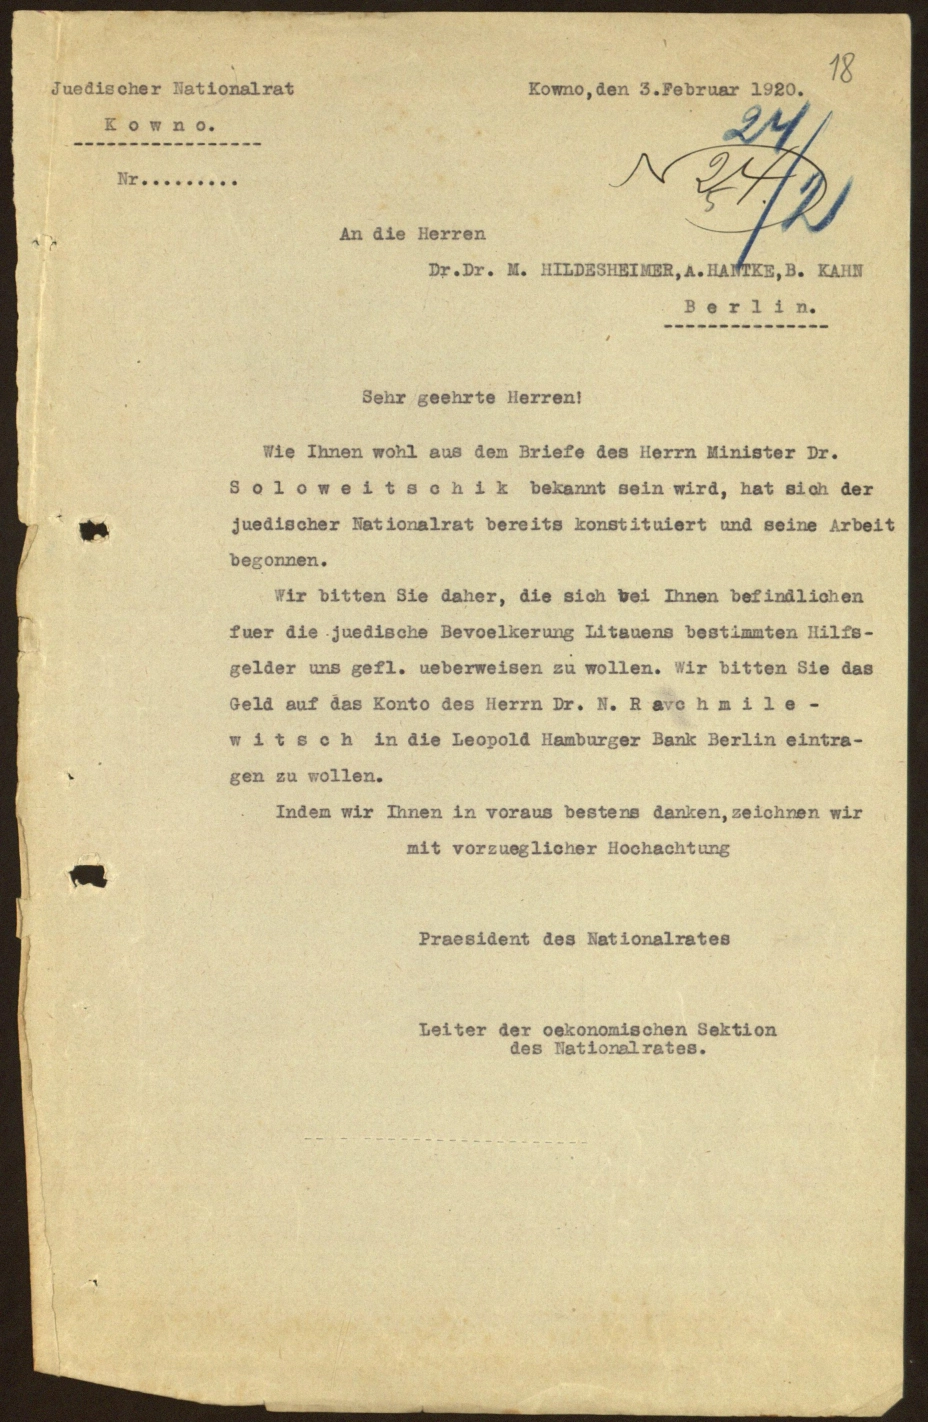 Jüdischer Nationalrat Kowno, Kowno, 3. Februar 1920